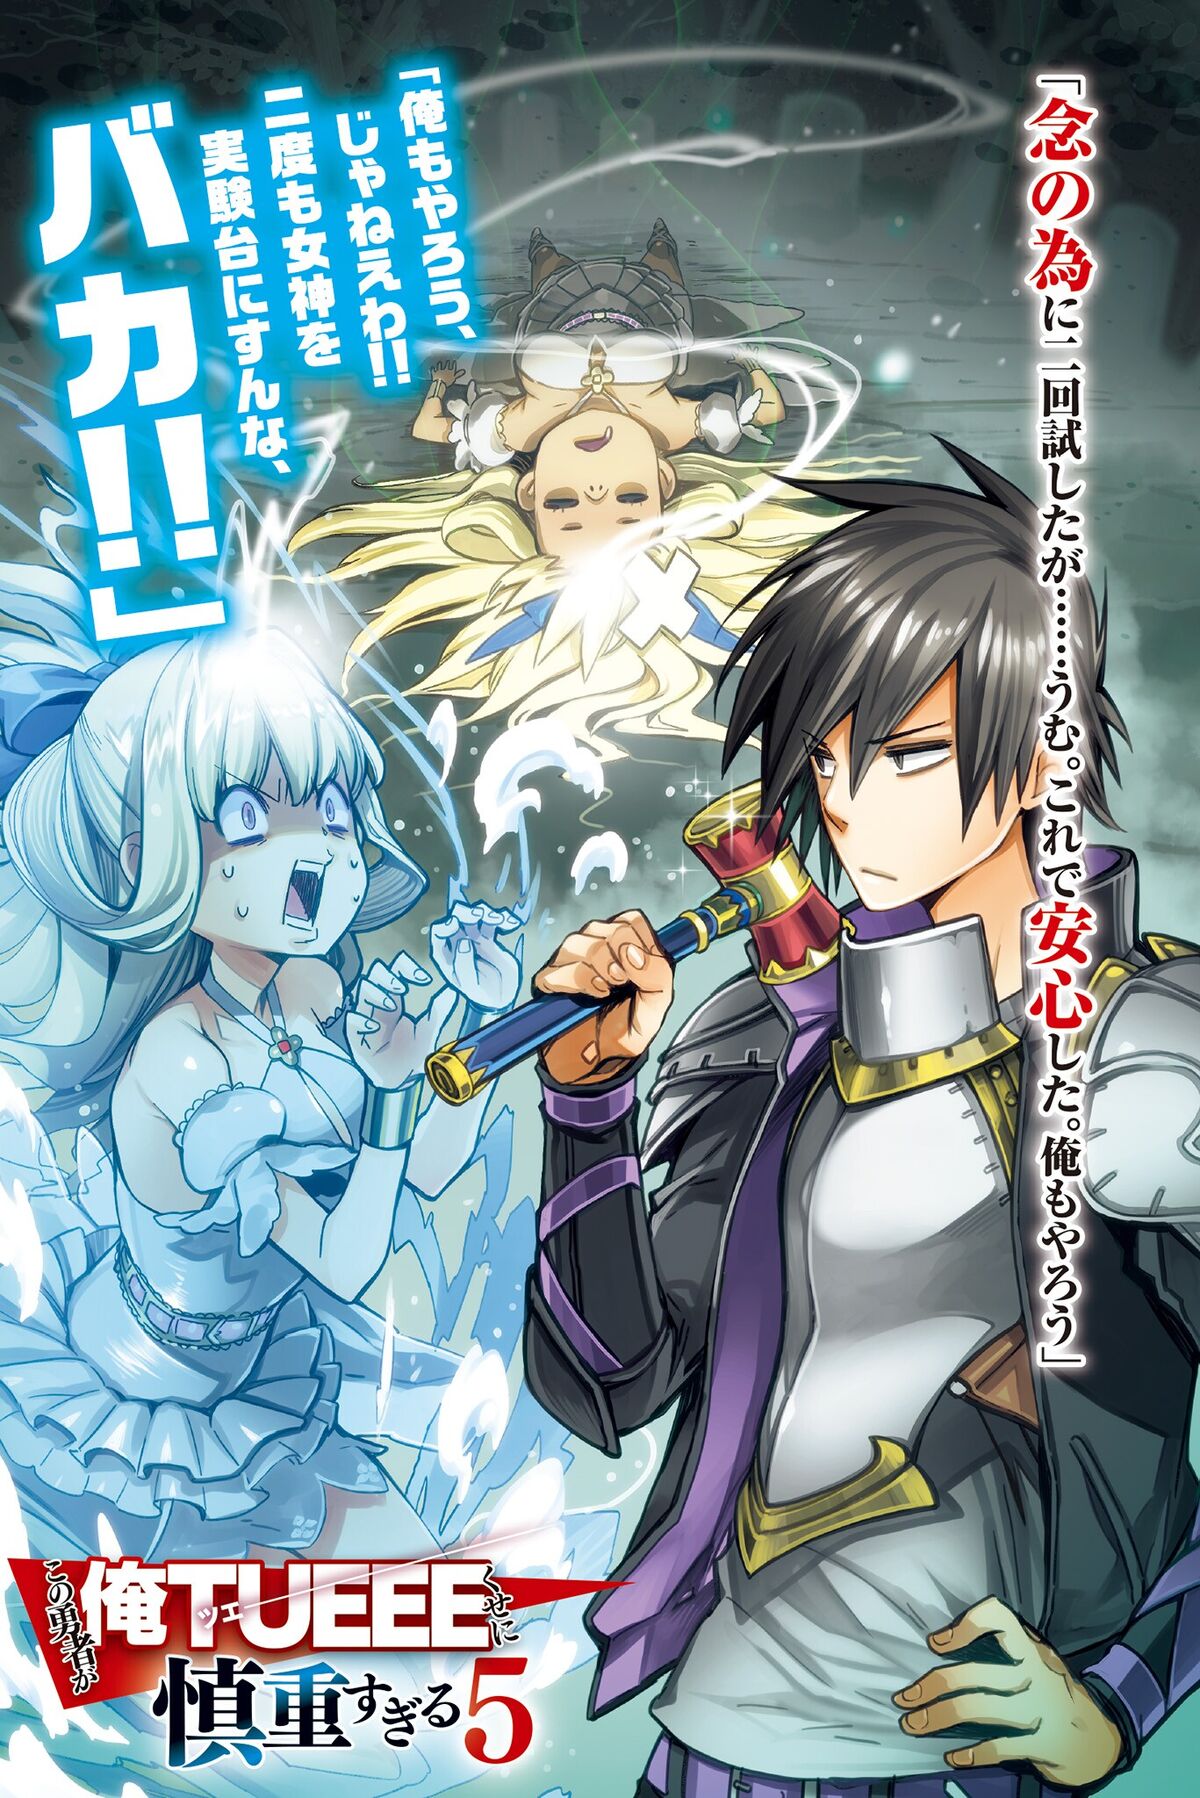 Volume 7 (Light Novel), Cautious Hero Wiki